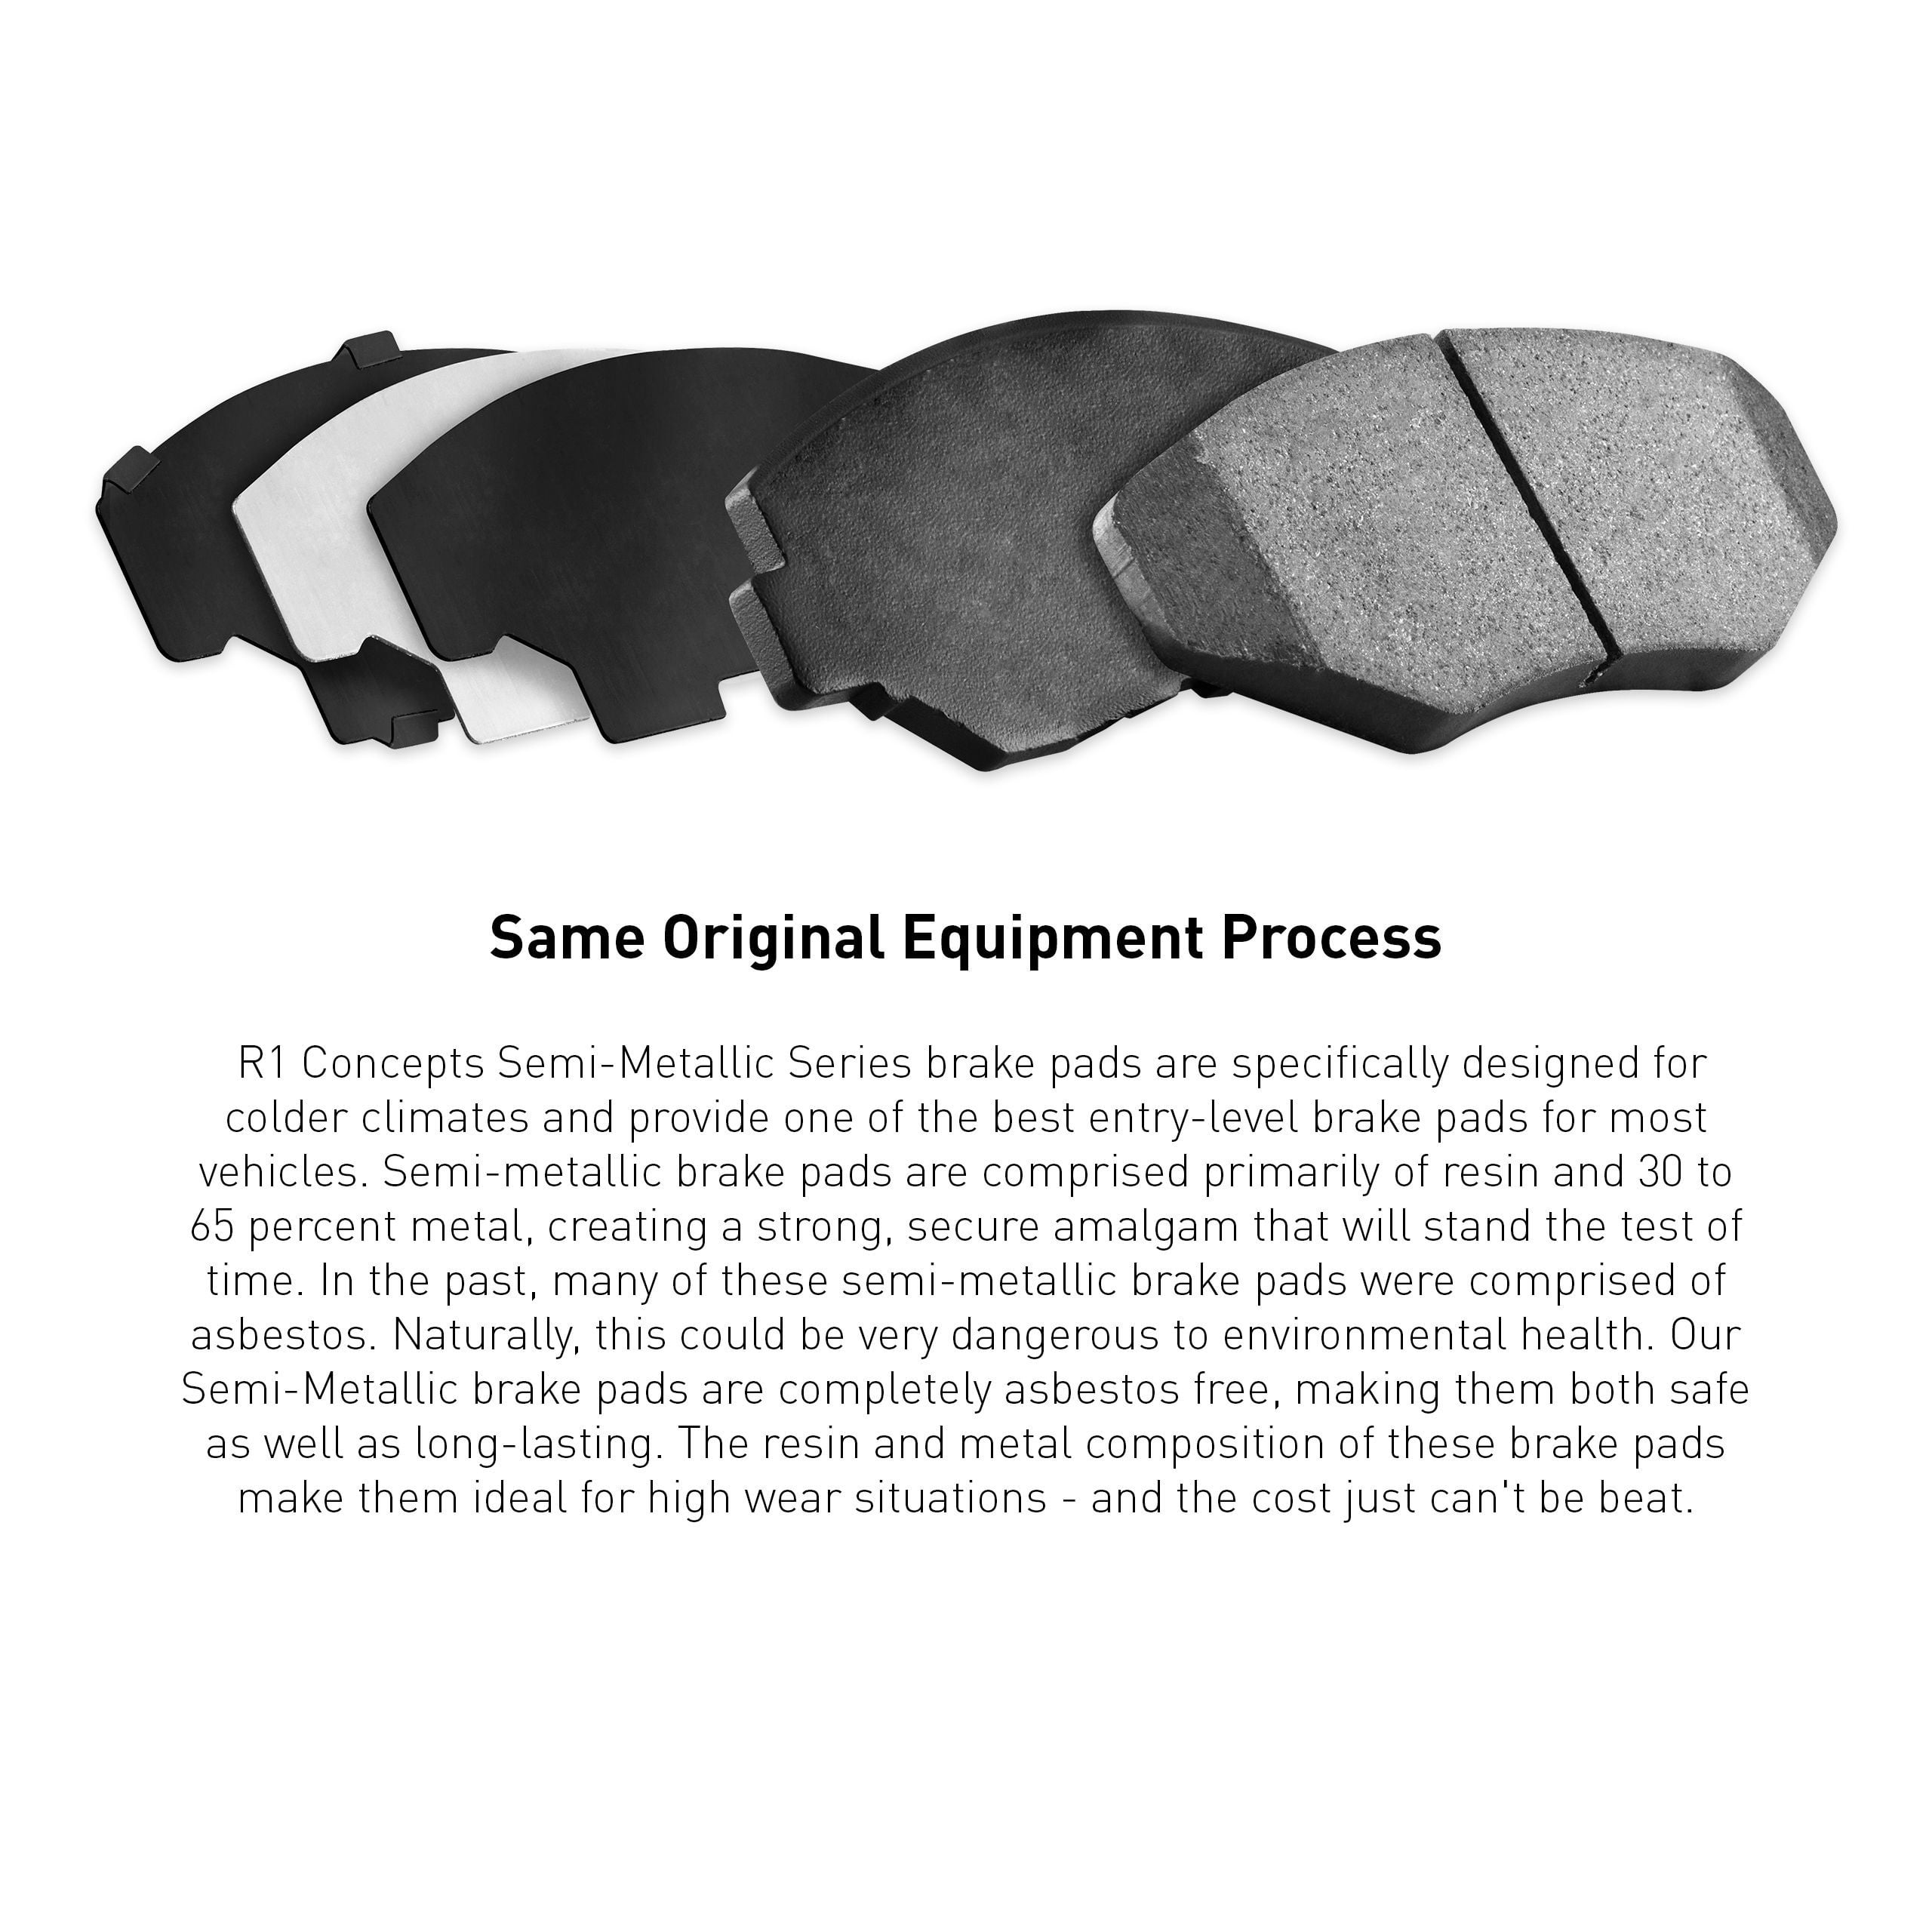 Front R1 concepts Semi-Metallic Series Brake Pads 2311-0275-00 